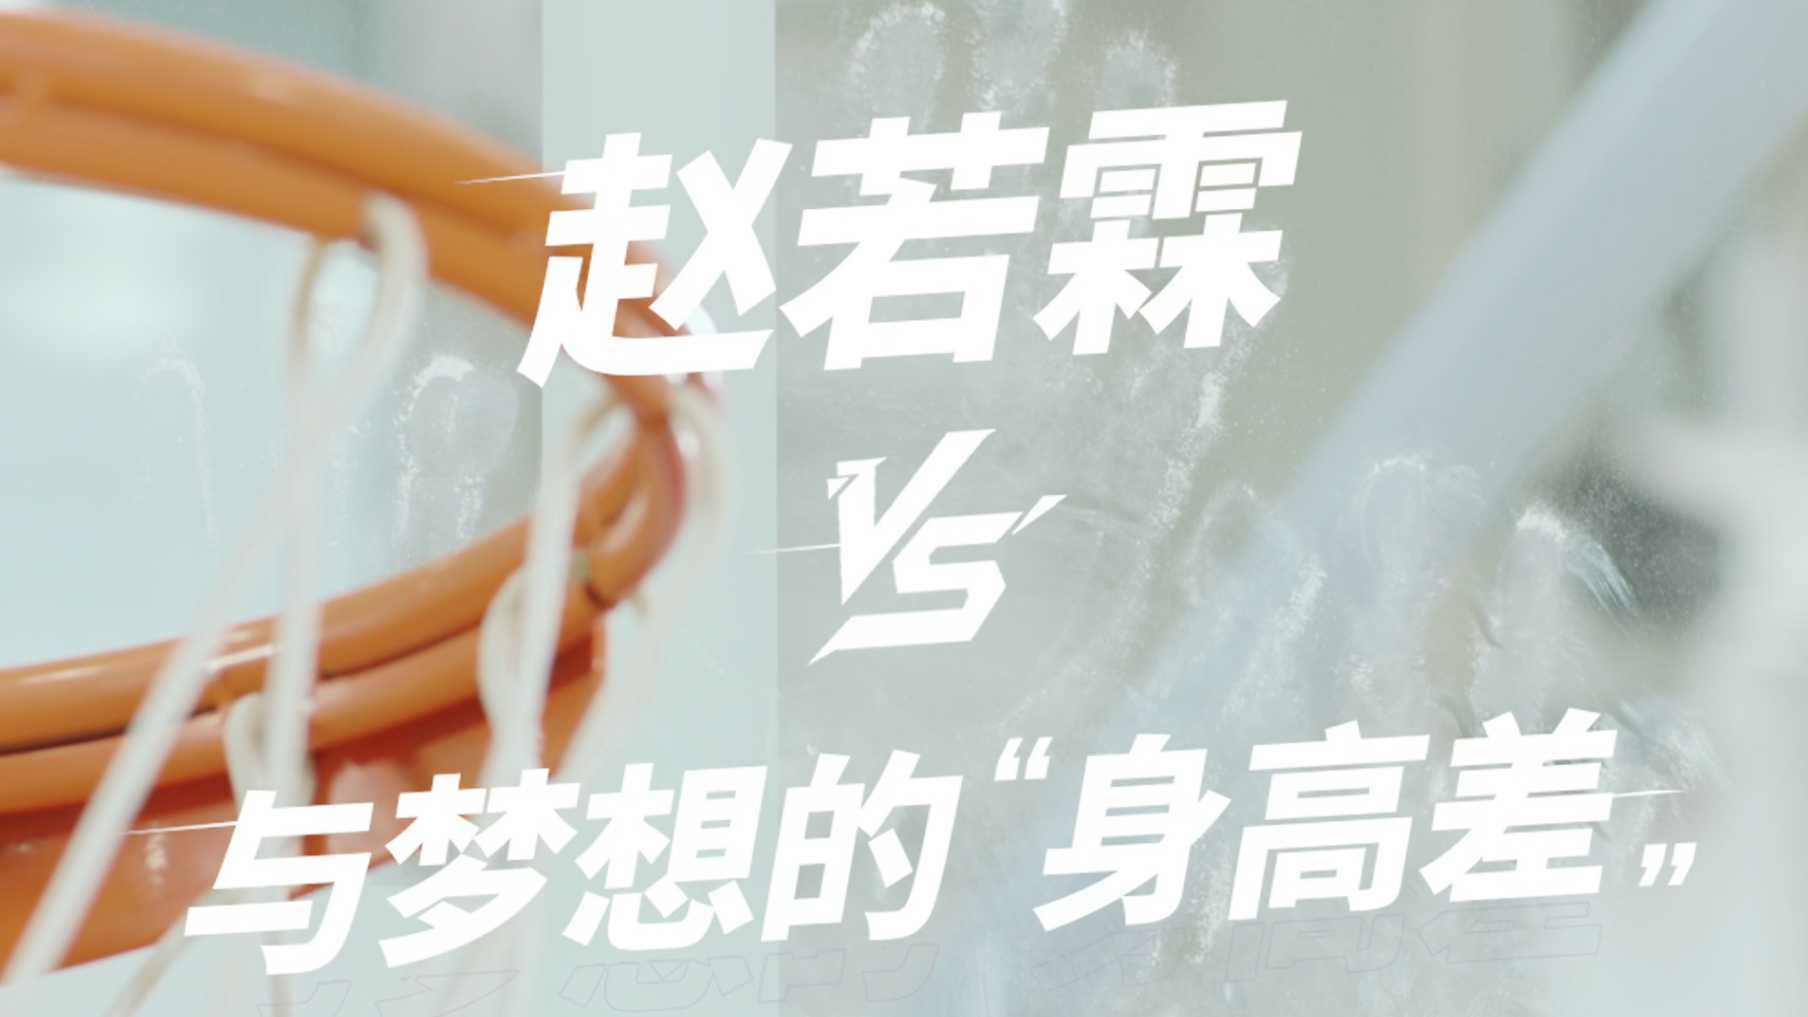 adidas #破限挑战赛# 赵若霖 VS. 与梦想的“身高差”Dir cut